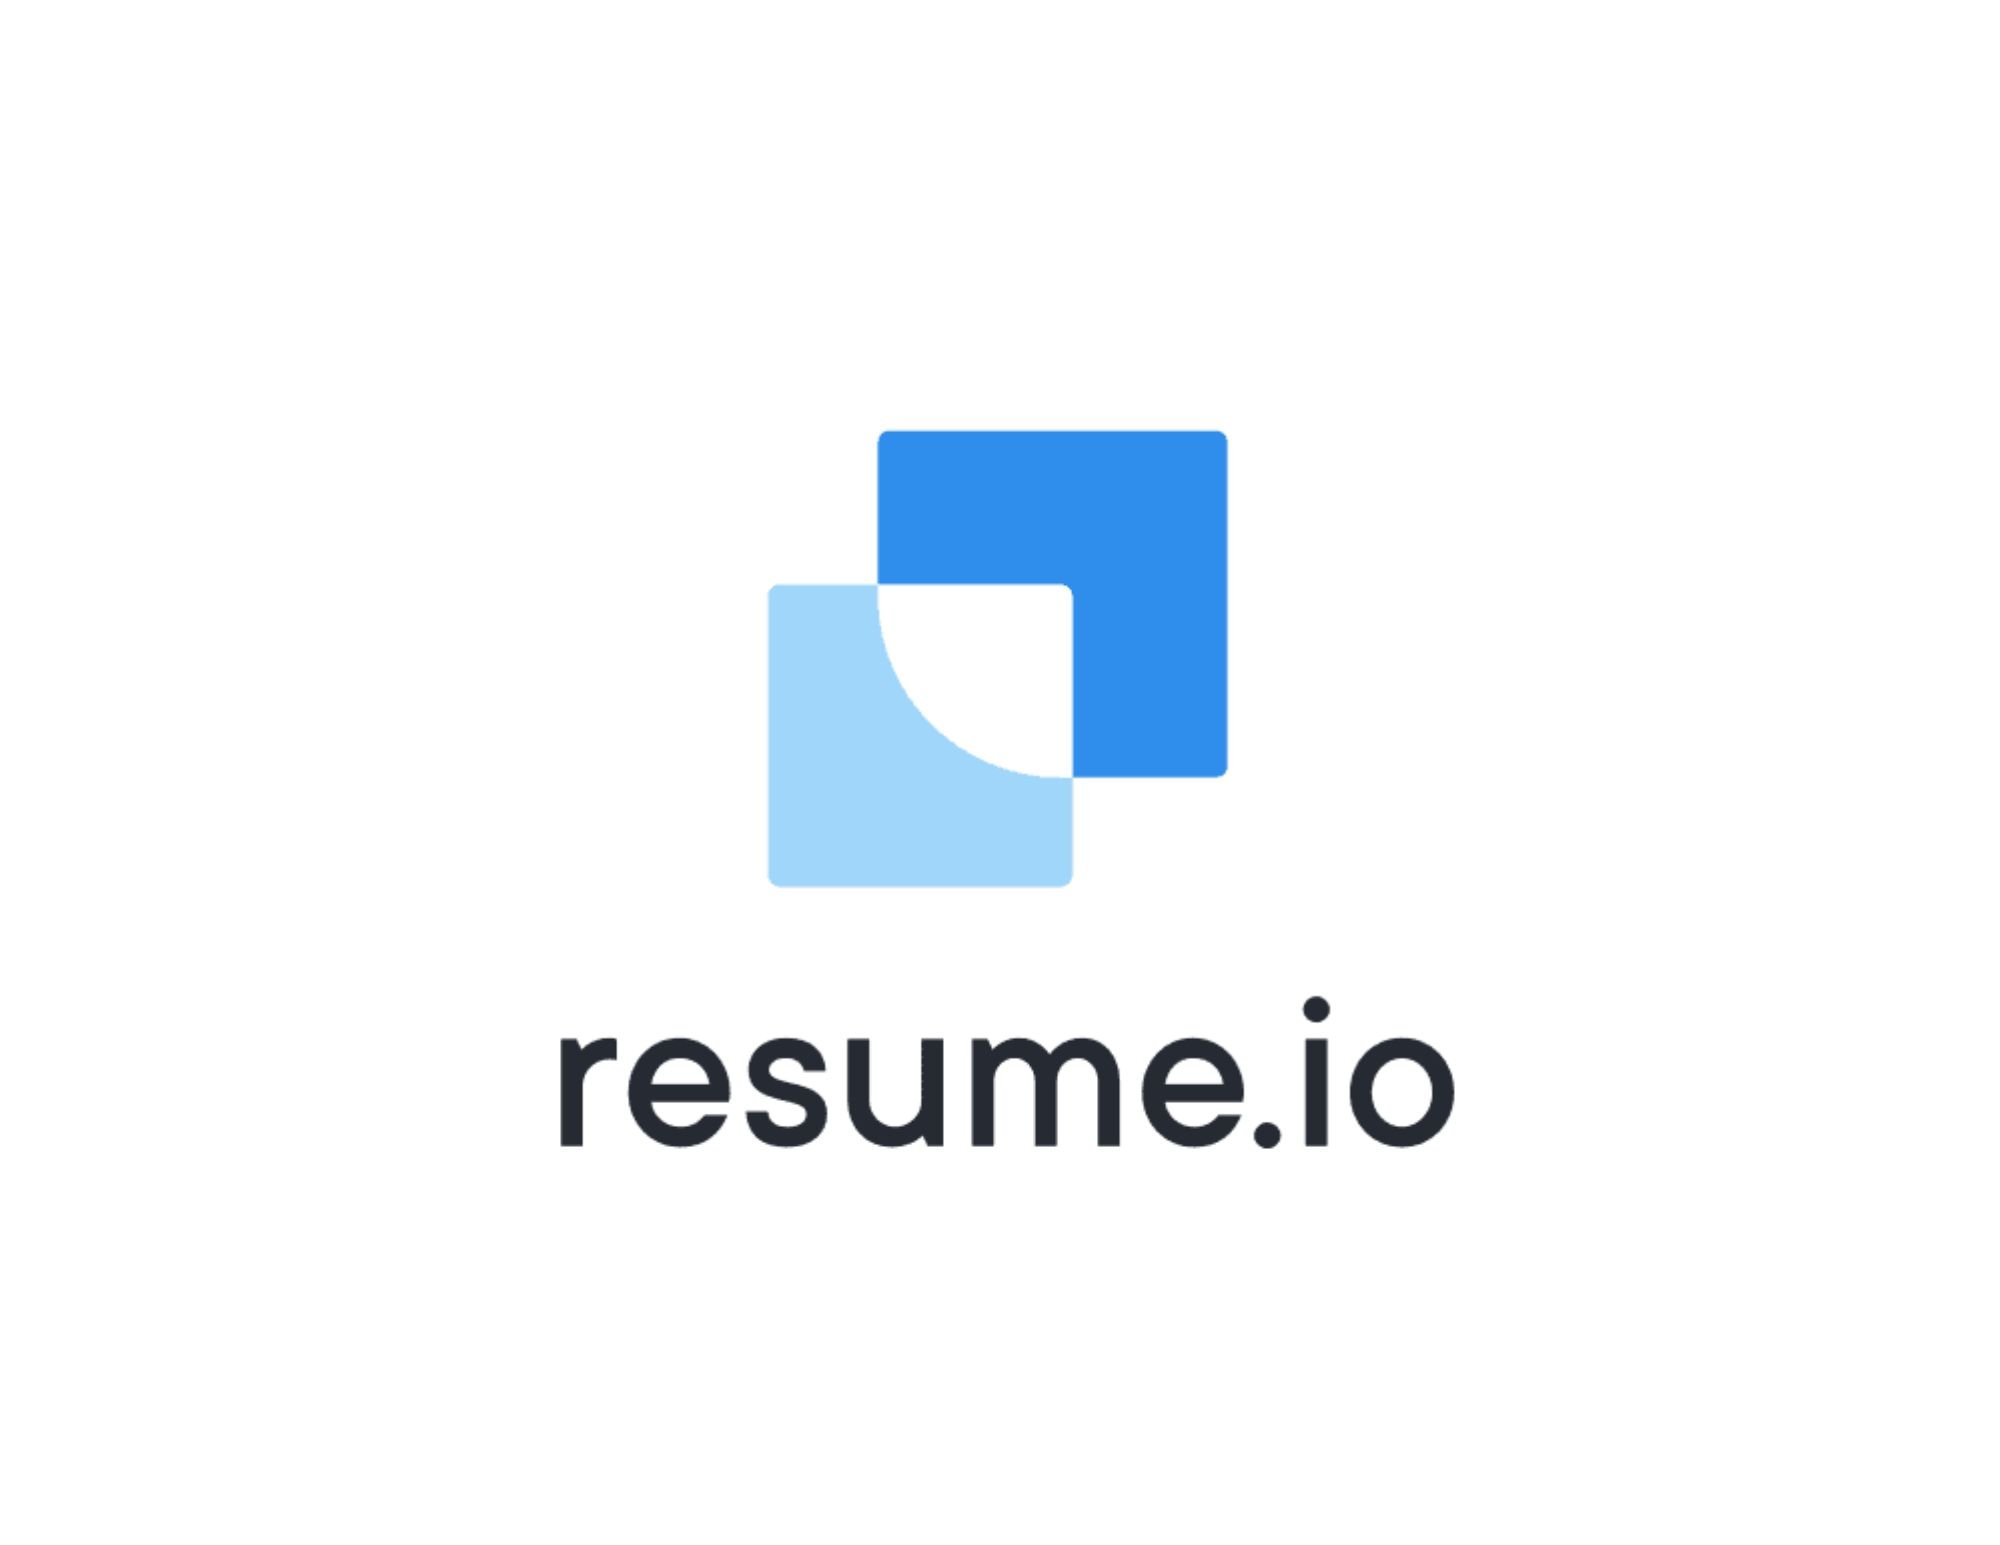 Resume.io_logo.jpg